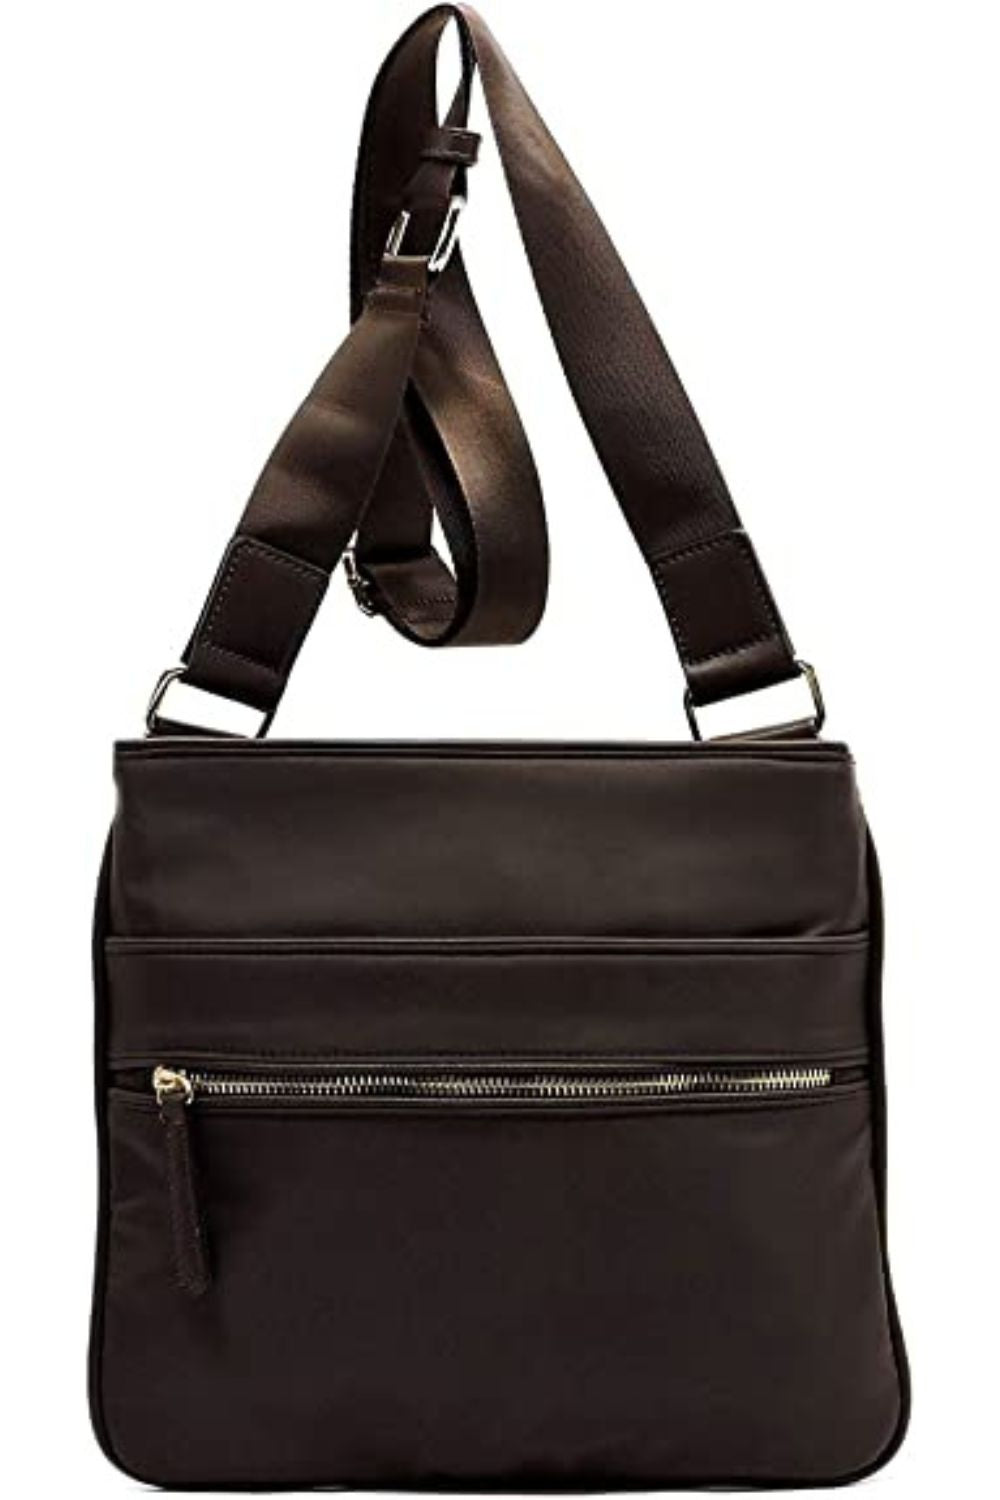 Jessie James Skylar Lock and Key Concealed Carry Crossbody Bag – Shop Munki